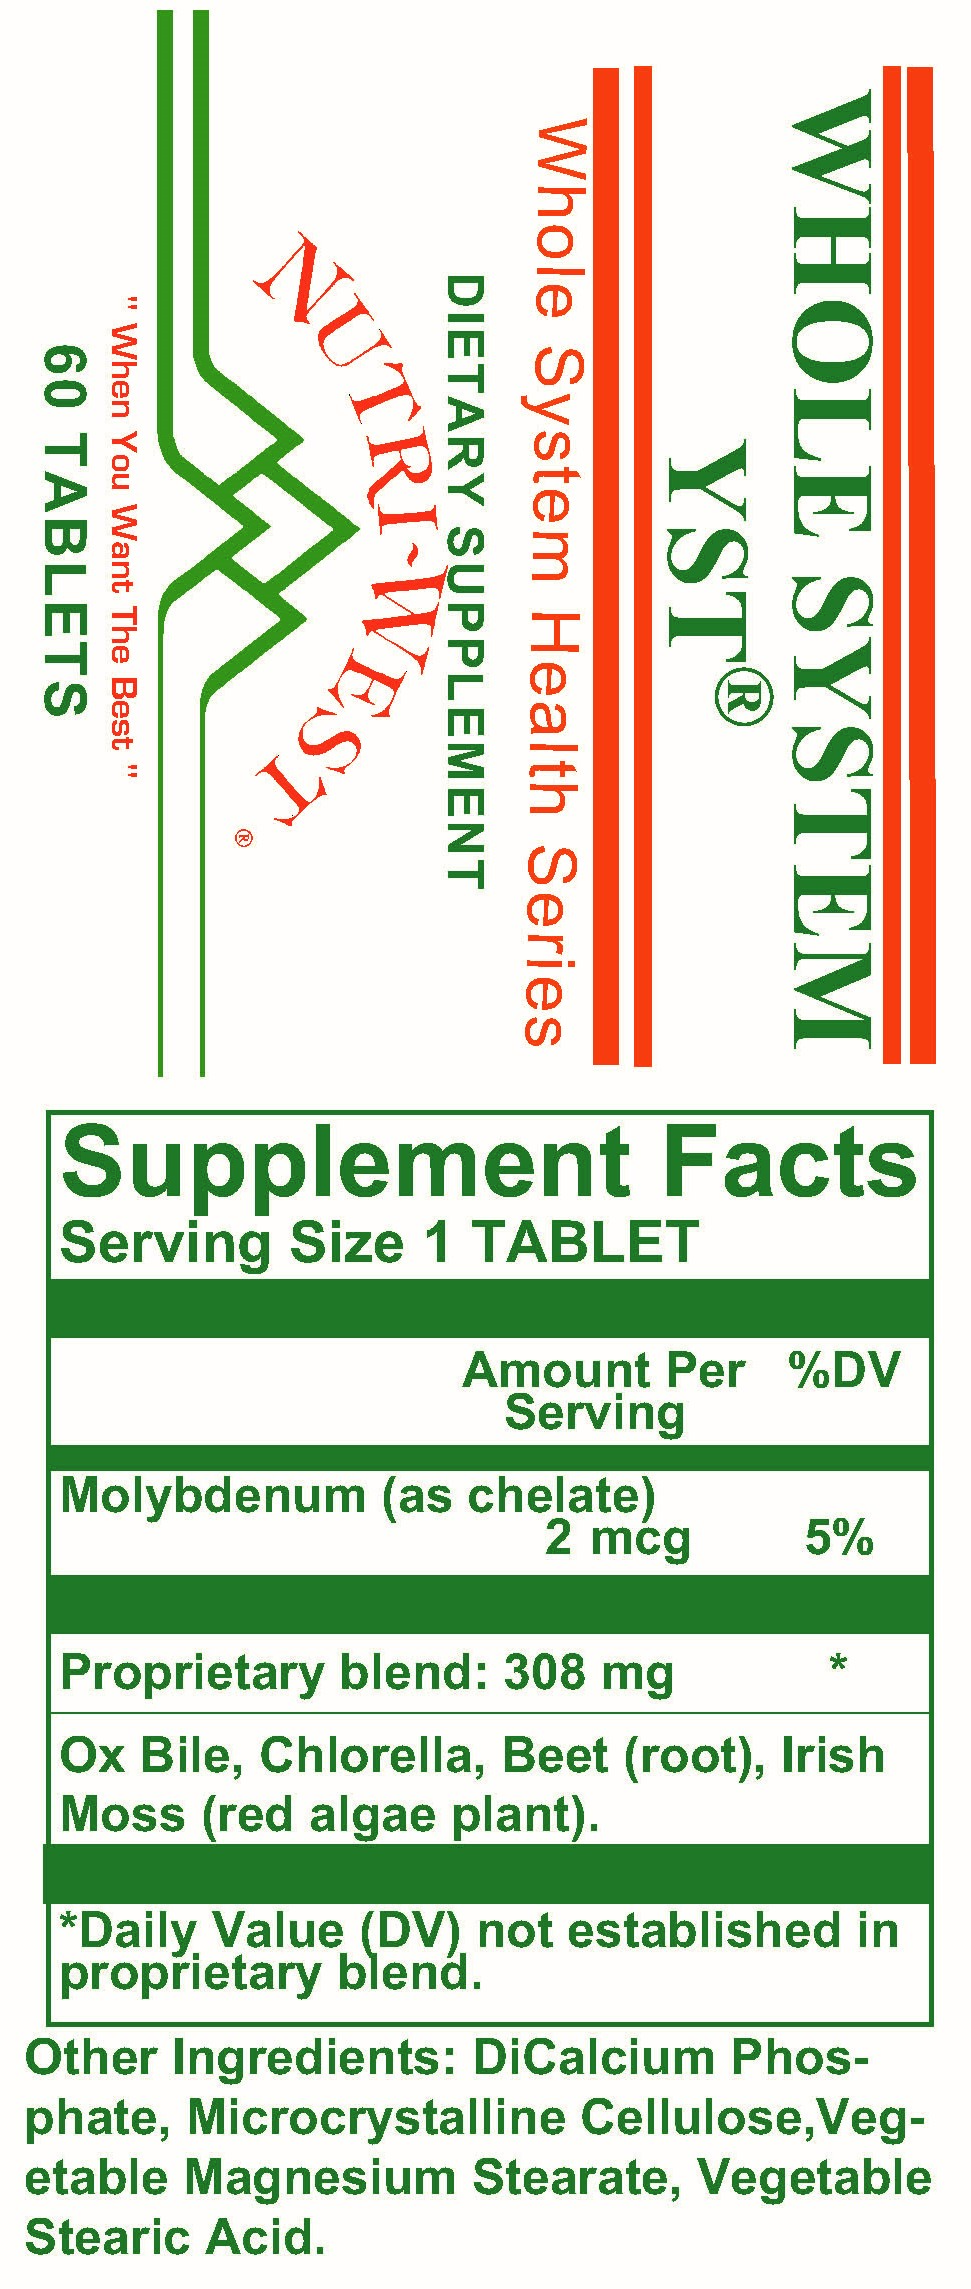 PDF] Tablet Delivery & Stearic Acid